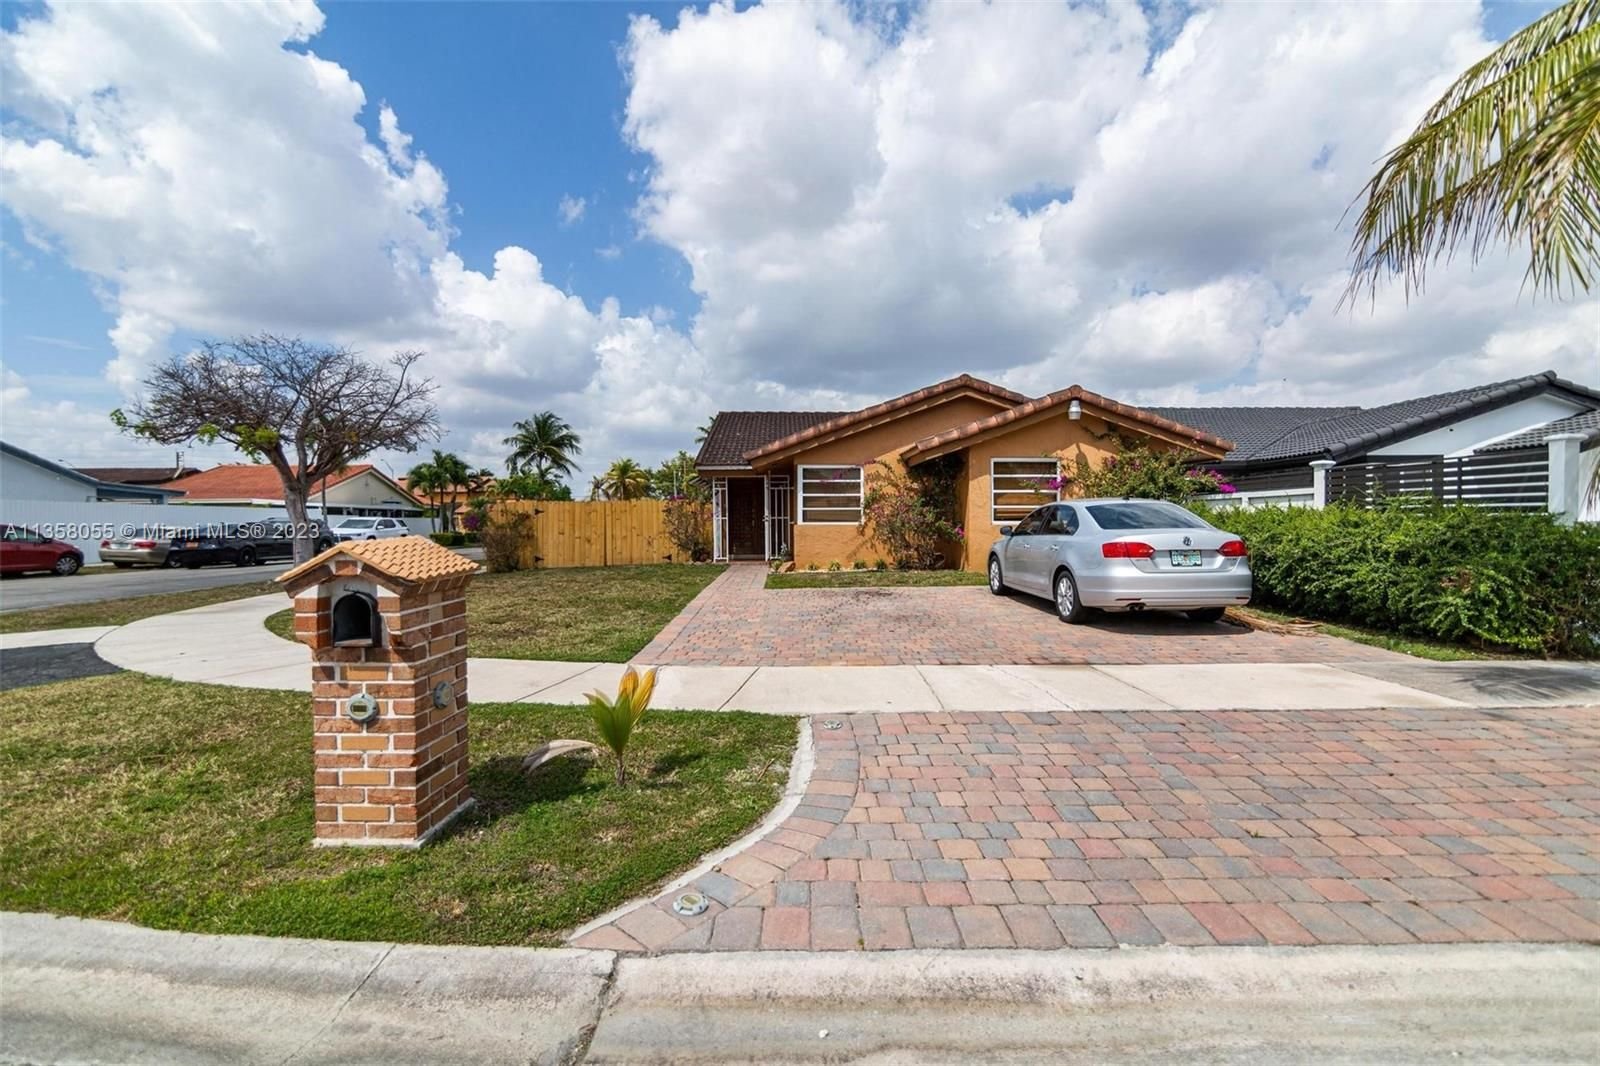 Real estate property located at 13241 27th St, Miami-Dade County, Miami, FL